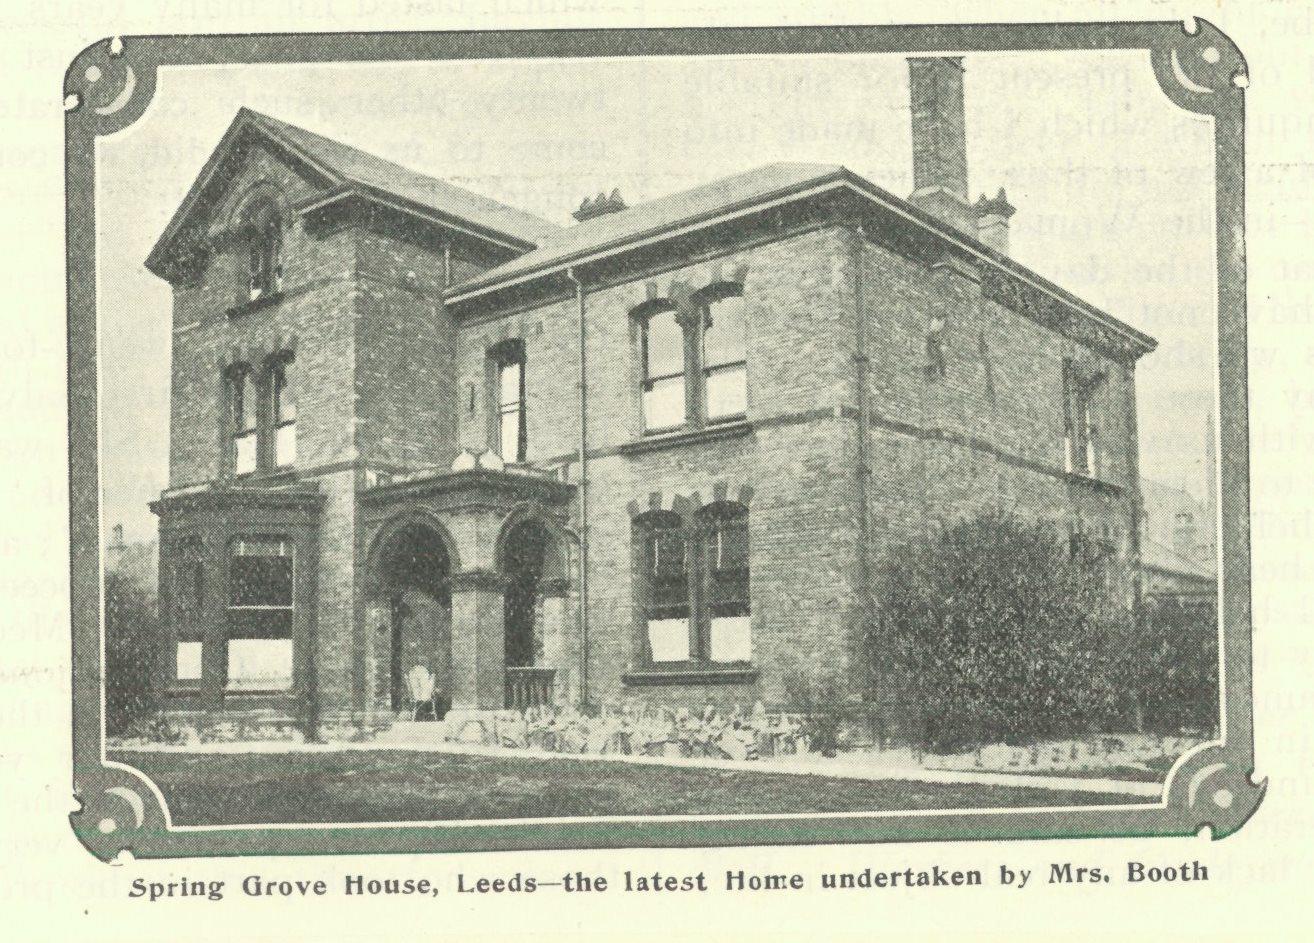 Spring grove house 1909